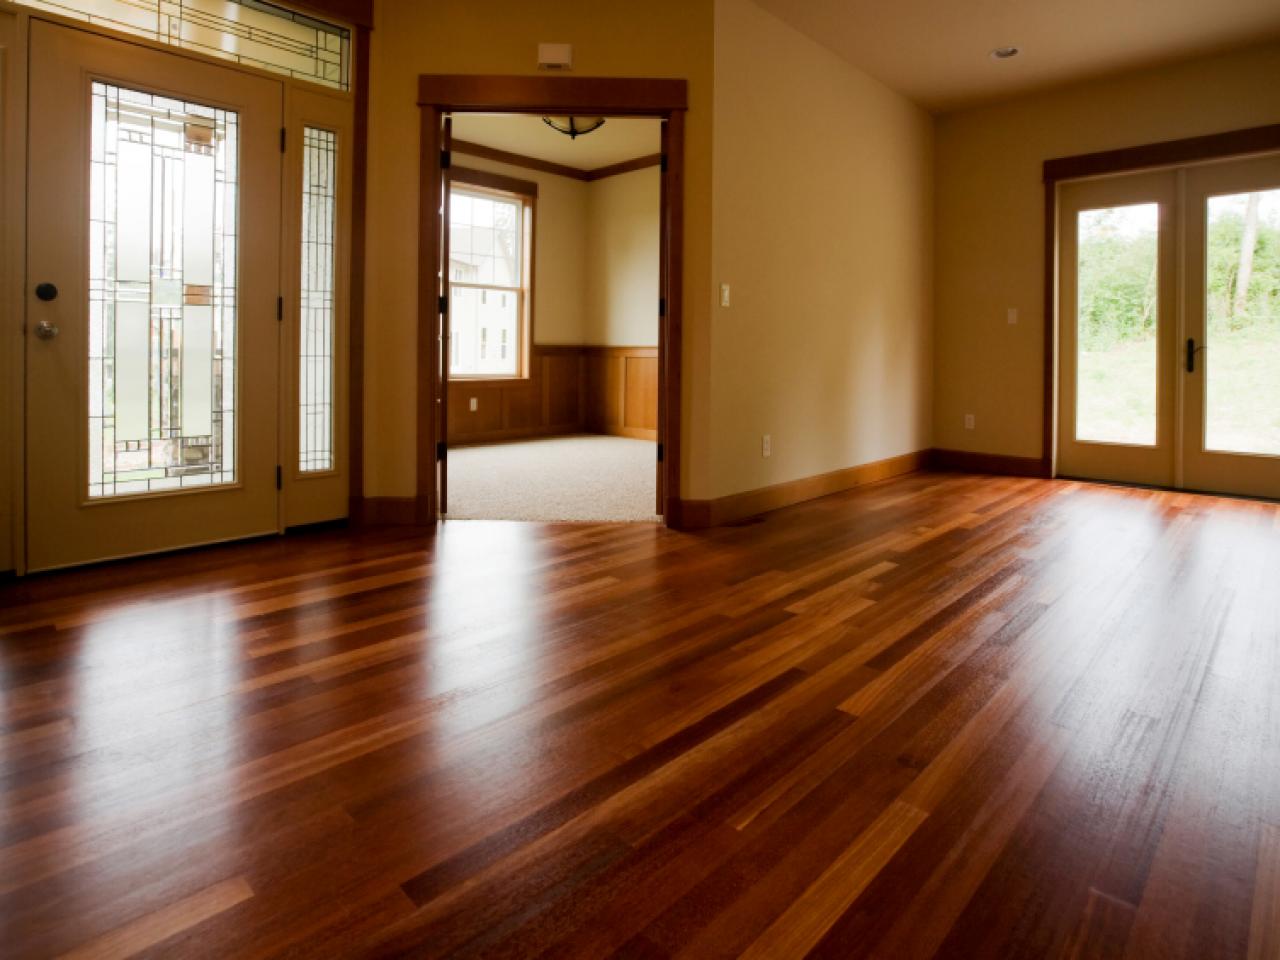 Cleaning Tile Wood And Vinyl Floors, How To Polish Hardwood Floors